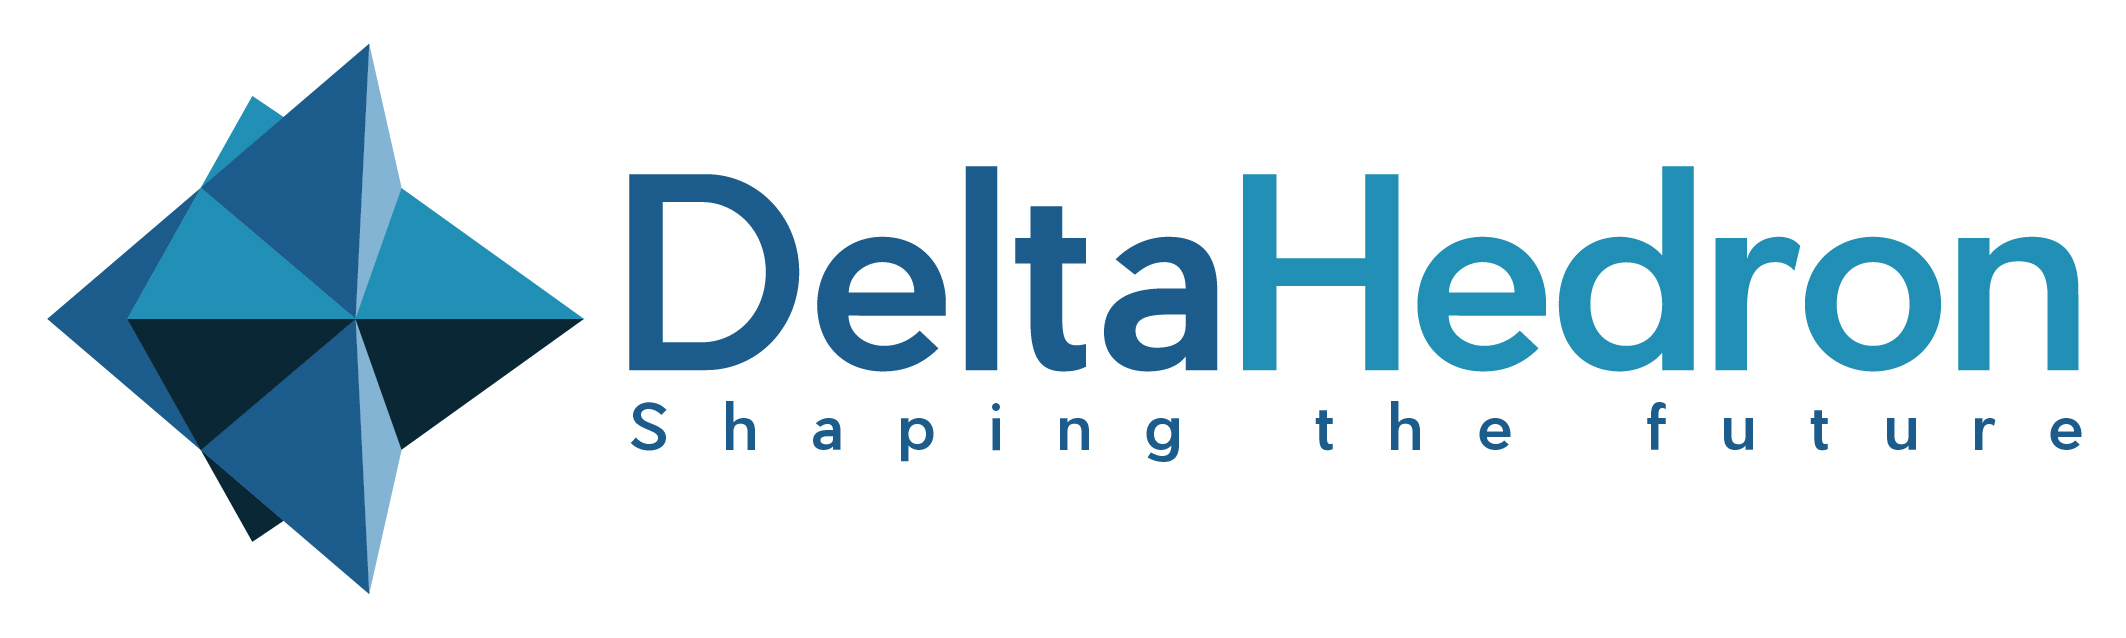 Deltahedron Logo Tagline.jpg